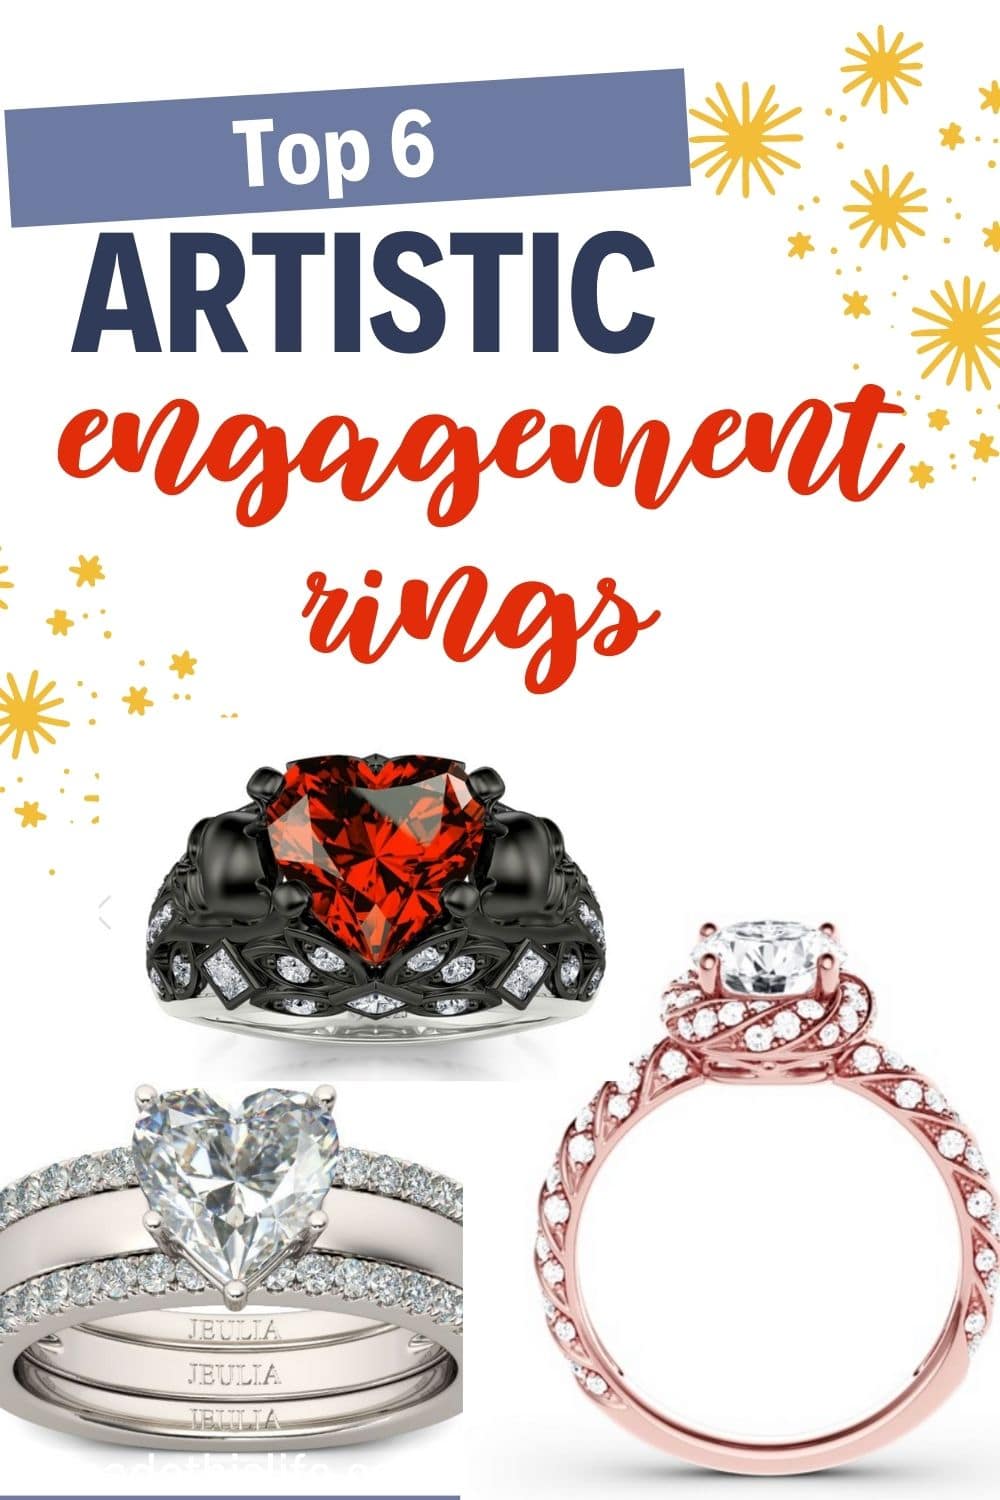 Top 6 Artistic Engagement Rings